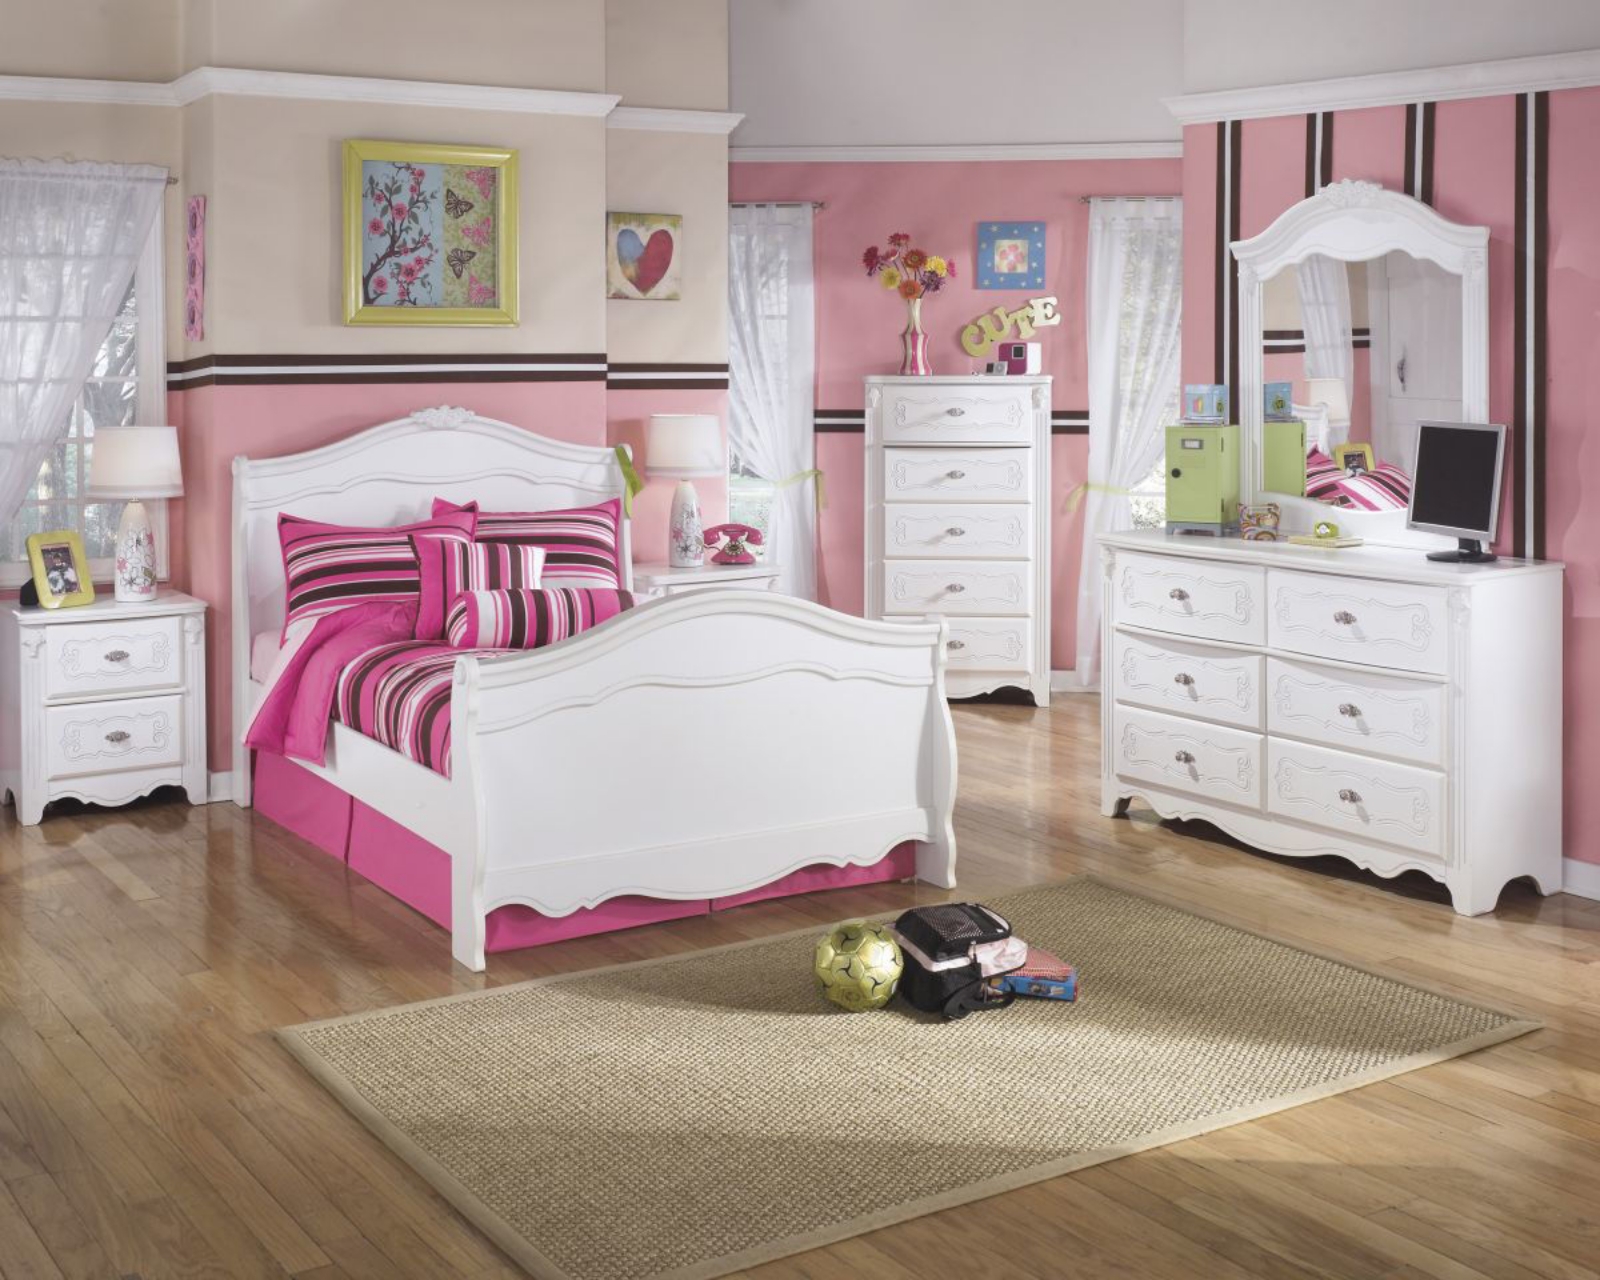 Picture of Exquisite 5 Piece Full Bedroom